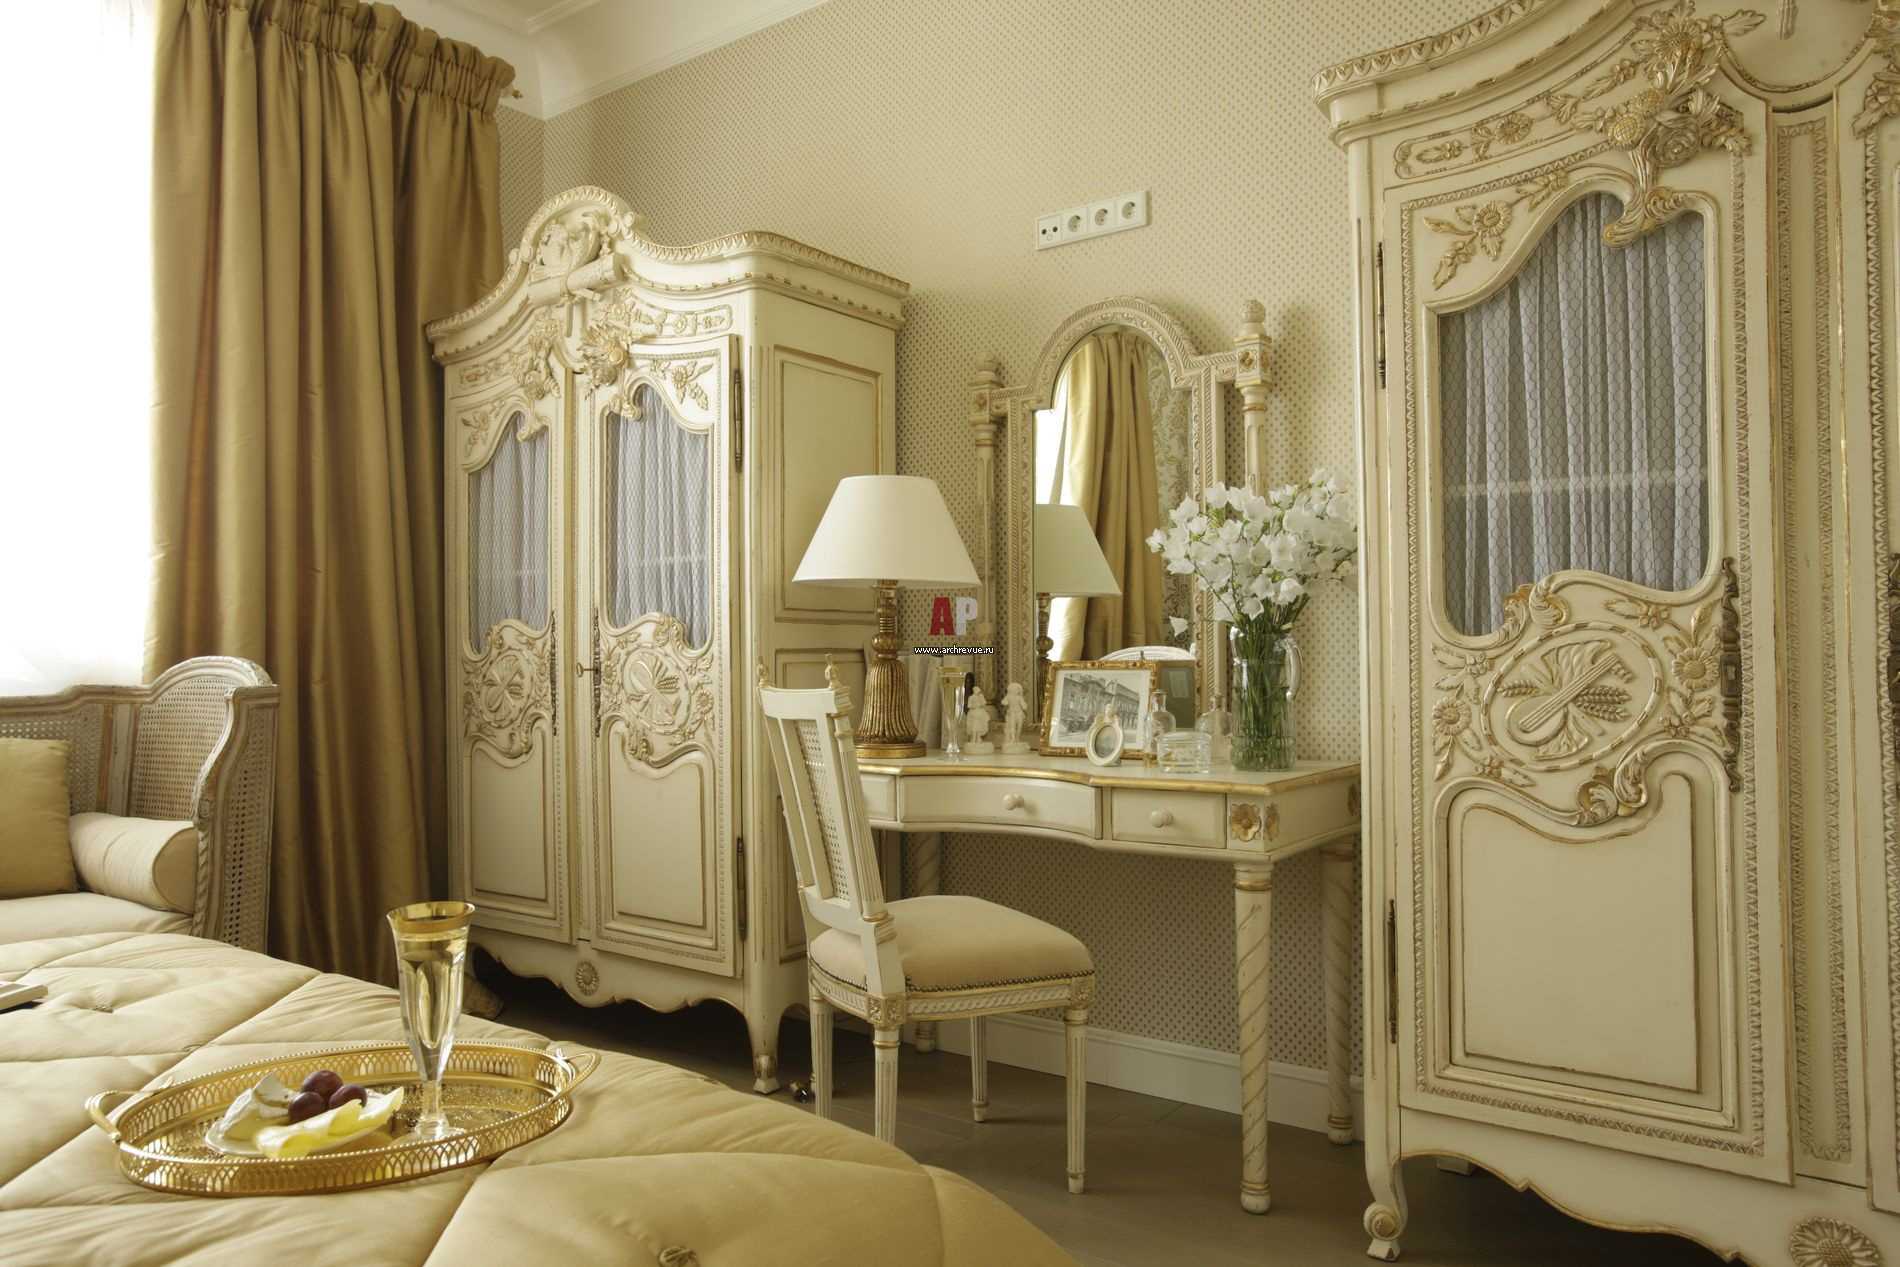 unusual interior in the Empire style bedroom